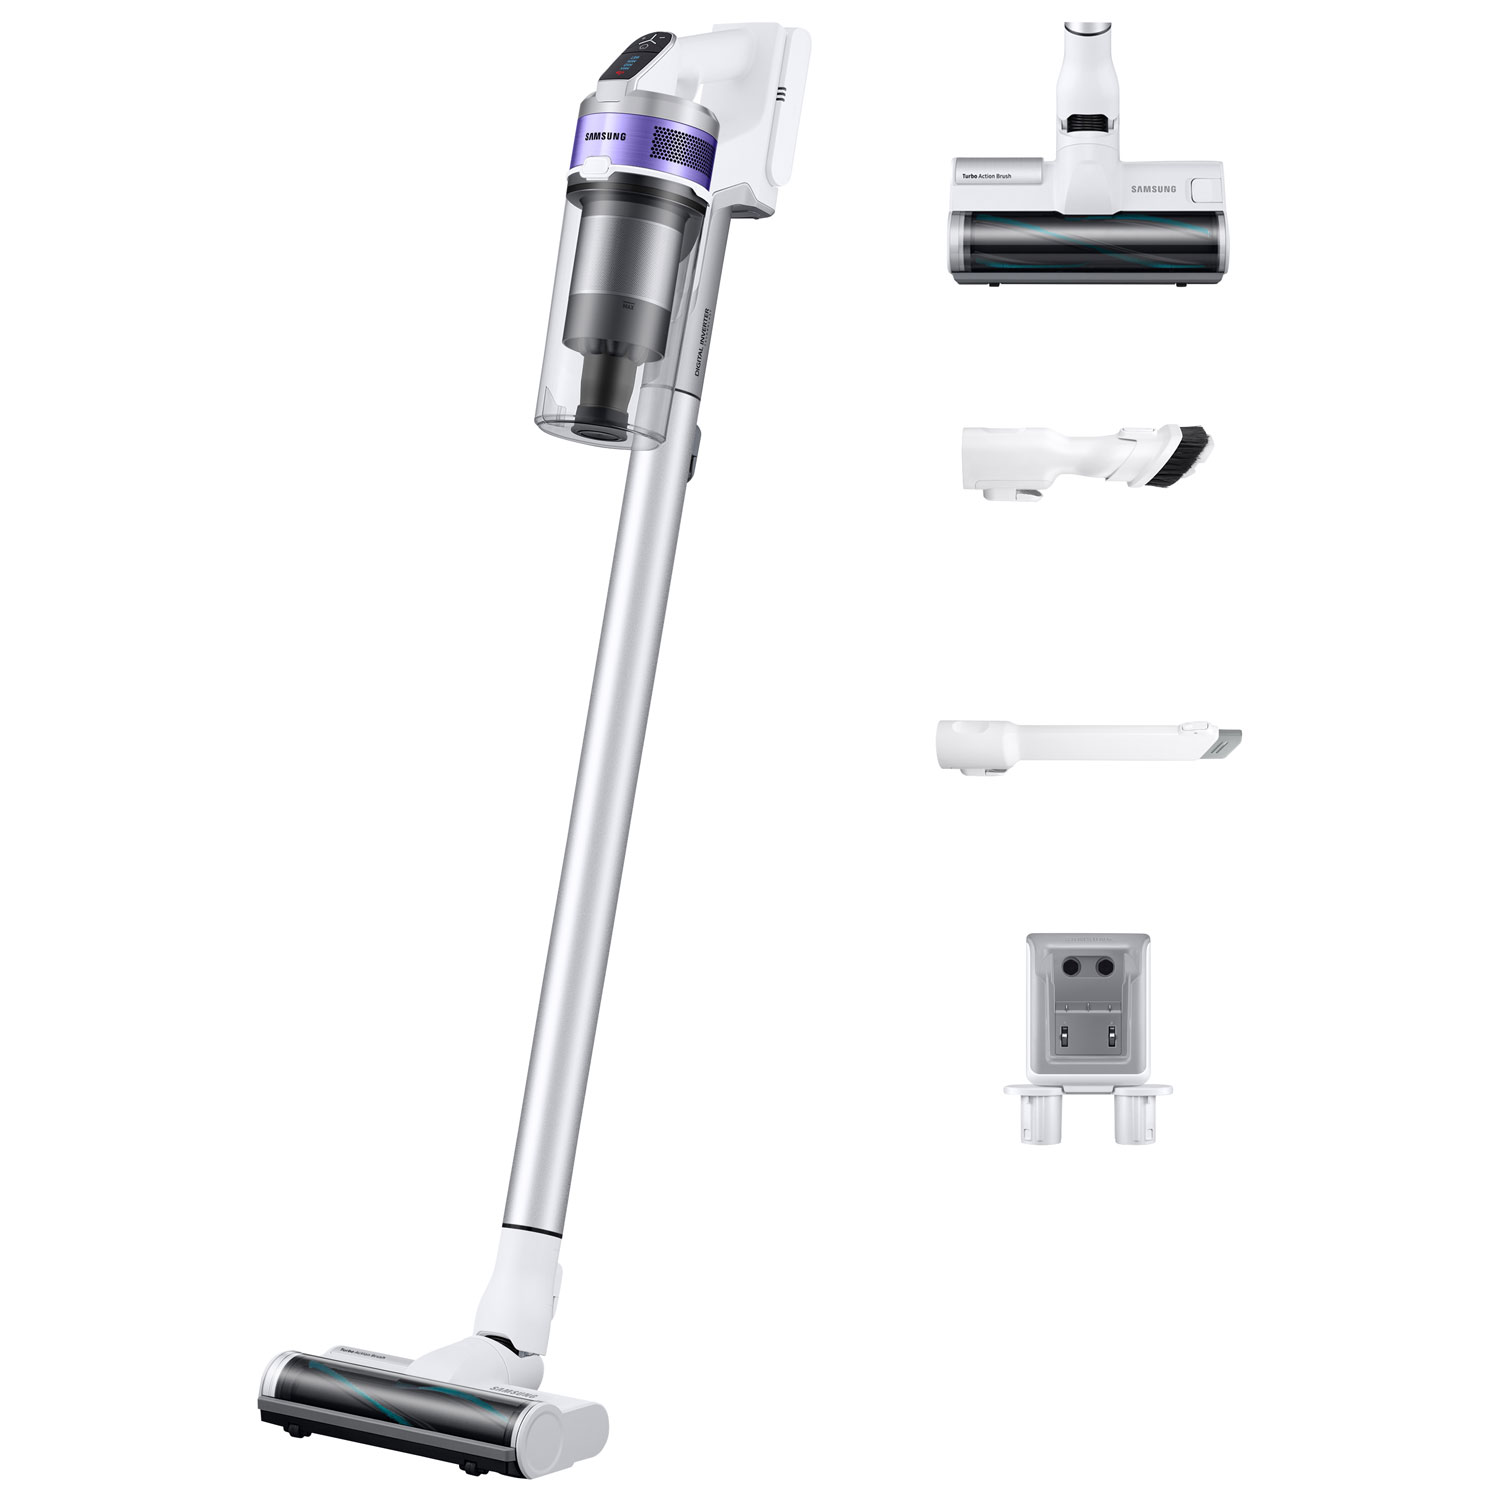 Samsung Jet 70 Pet Cordless Stick Vacuum - Teal Violet